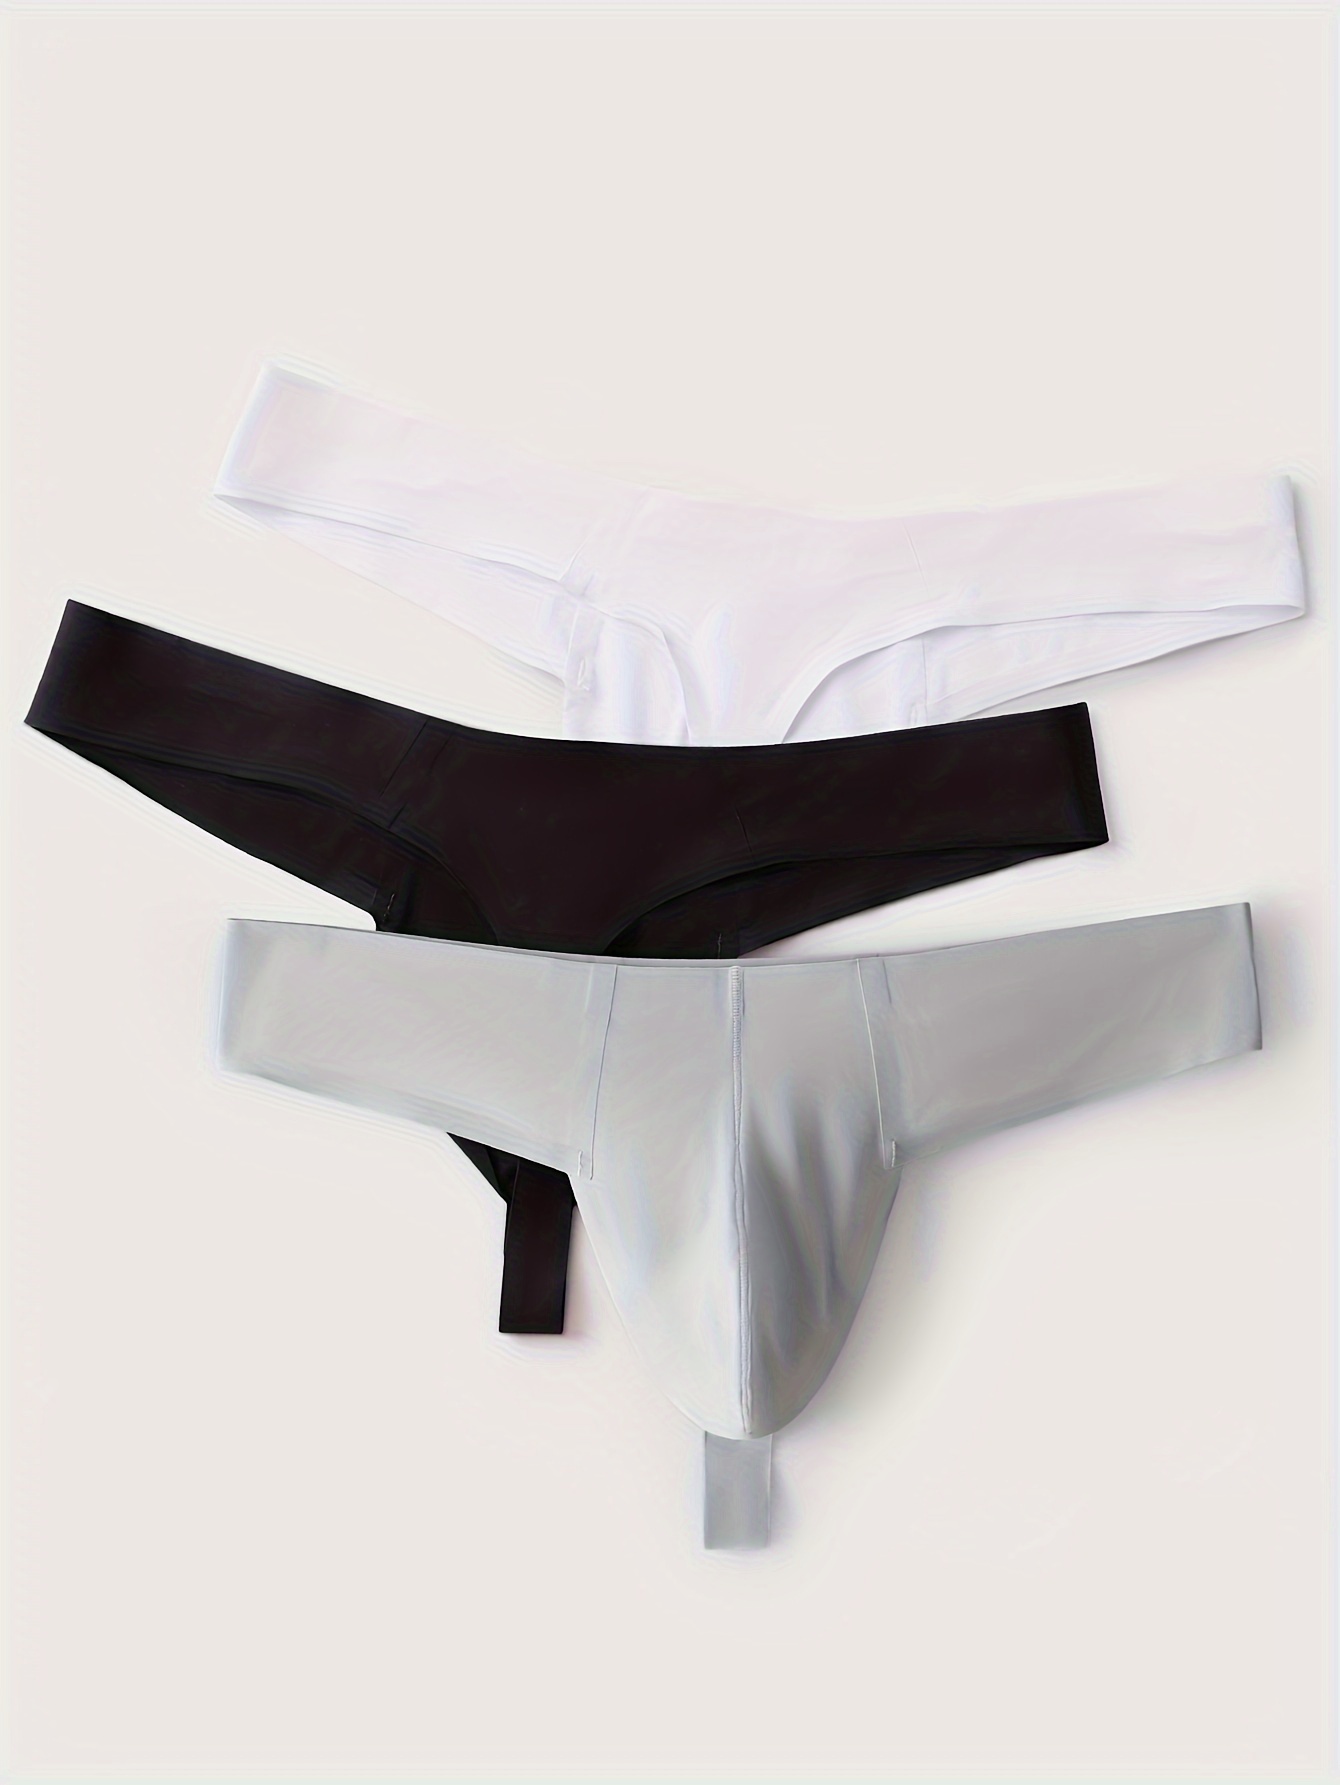 Men Pouch G-String Elephant Trunk Thongs Briefs Open Underwear Ultra-Soft  T-Back Men's Sexy Underwear, Men With JJ Sets Of Front